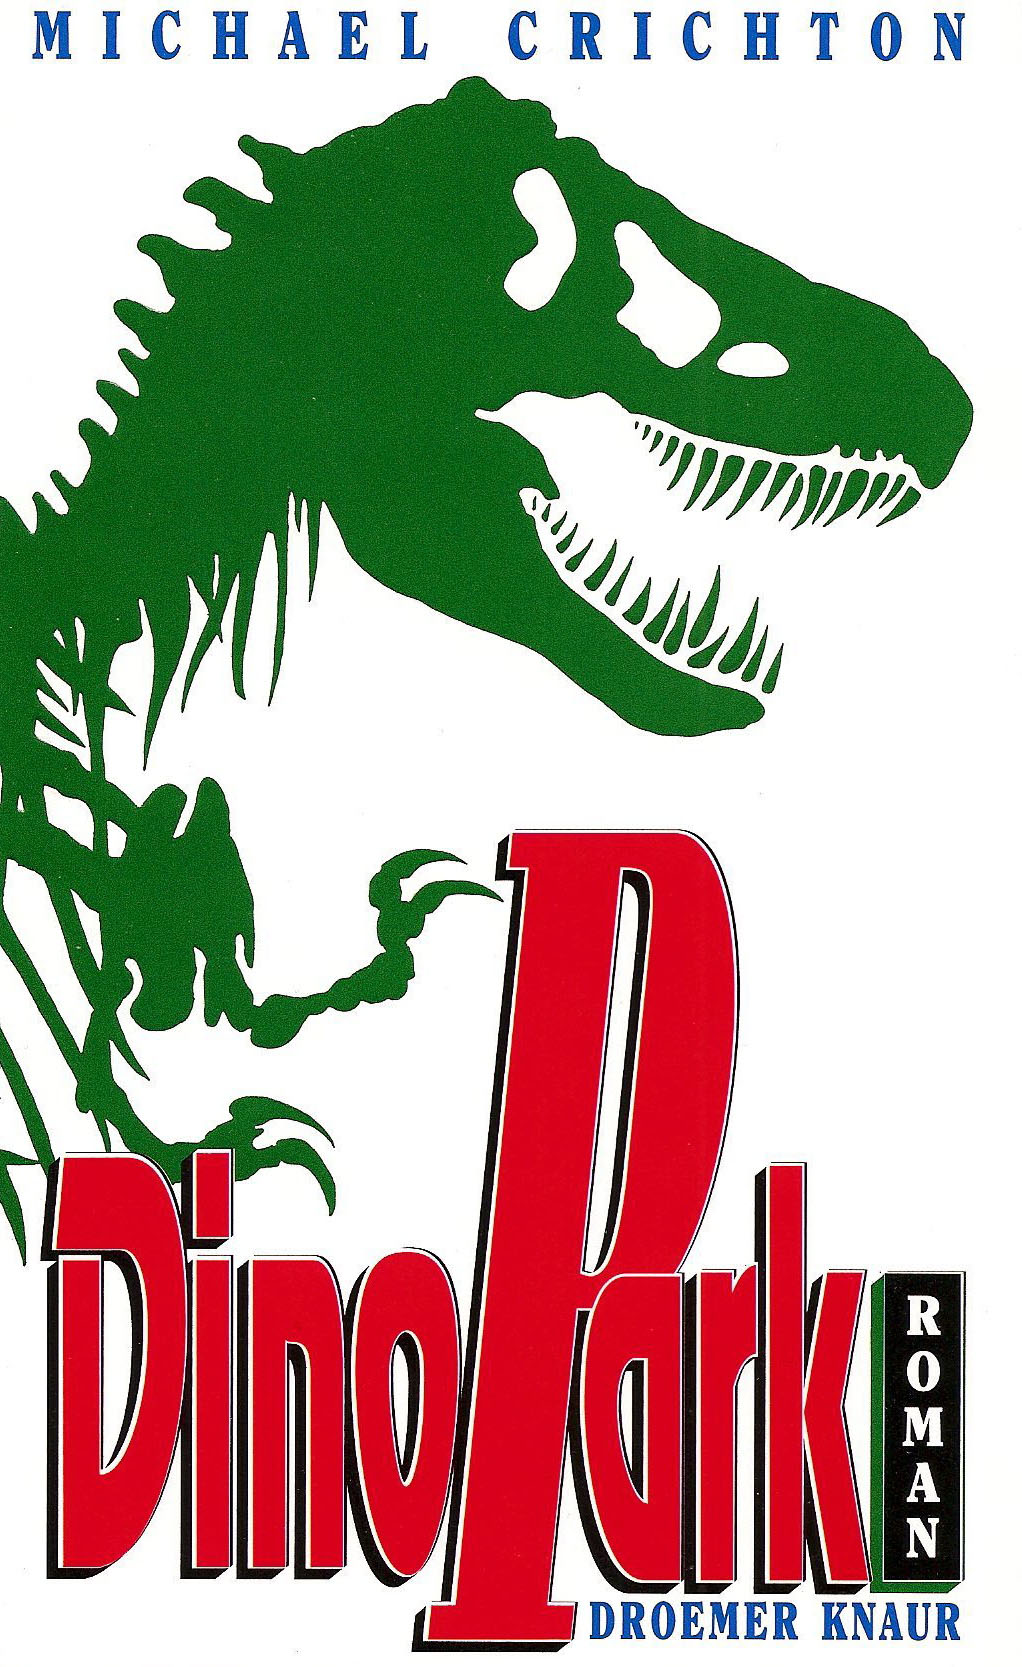 Jurassic Park
Germany – 1991